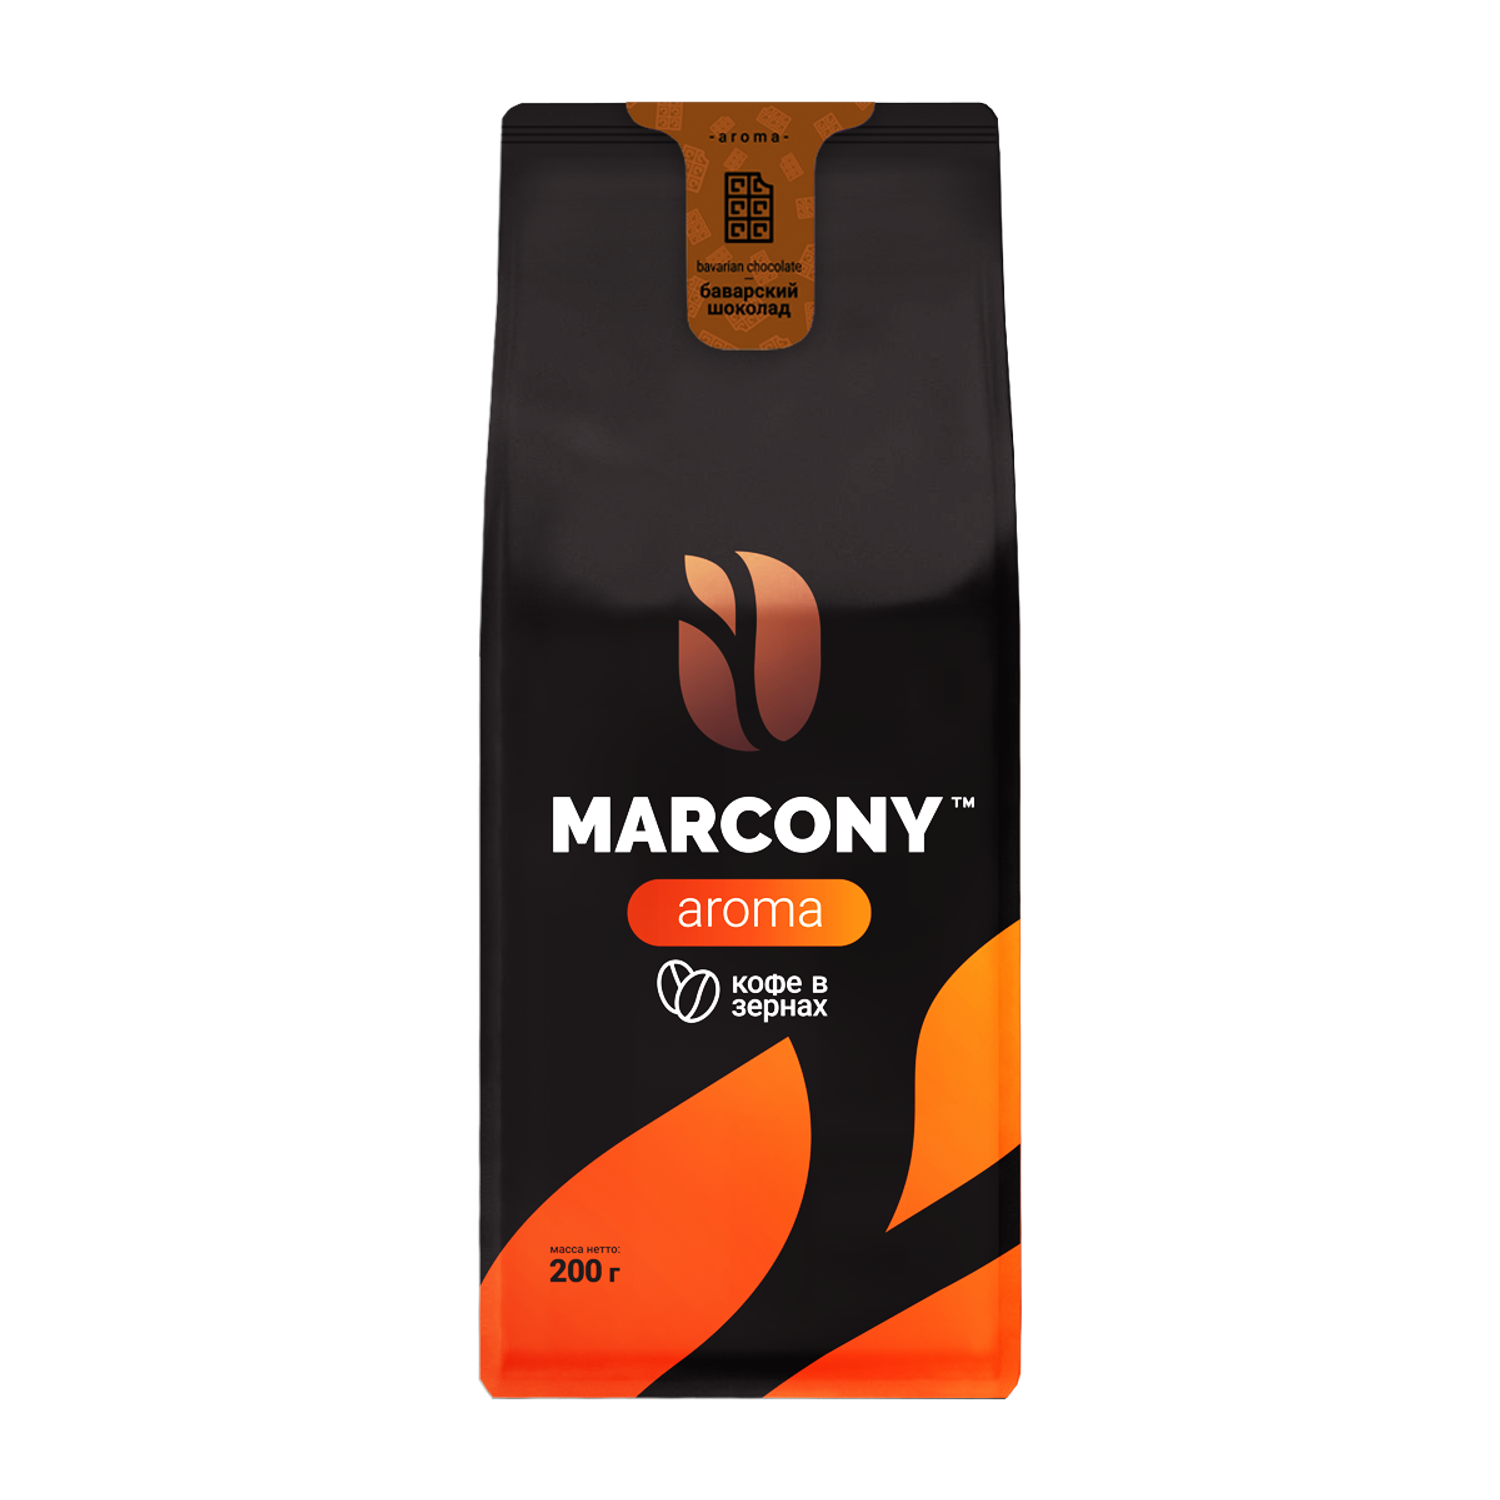 Кофе в зернах Marcony Aroma со вкусом Баварского шоколада 200 г - фото 1